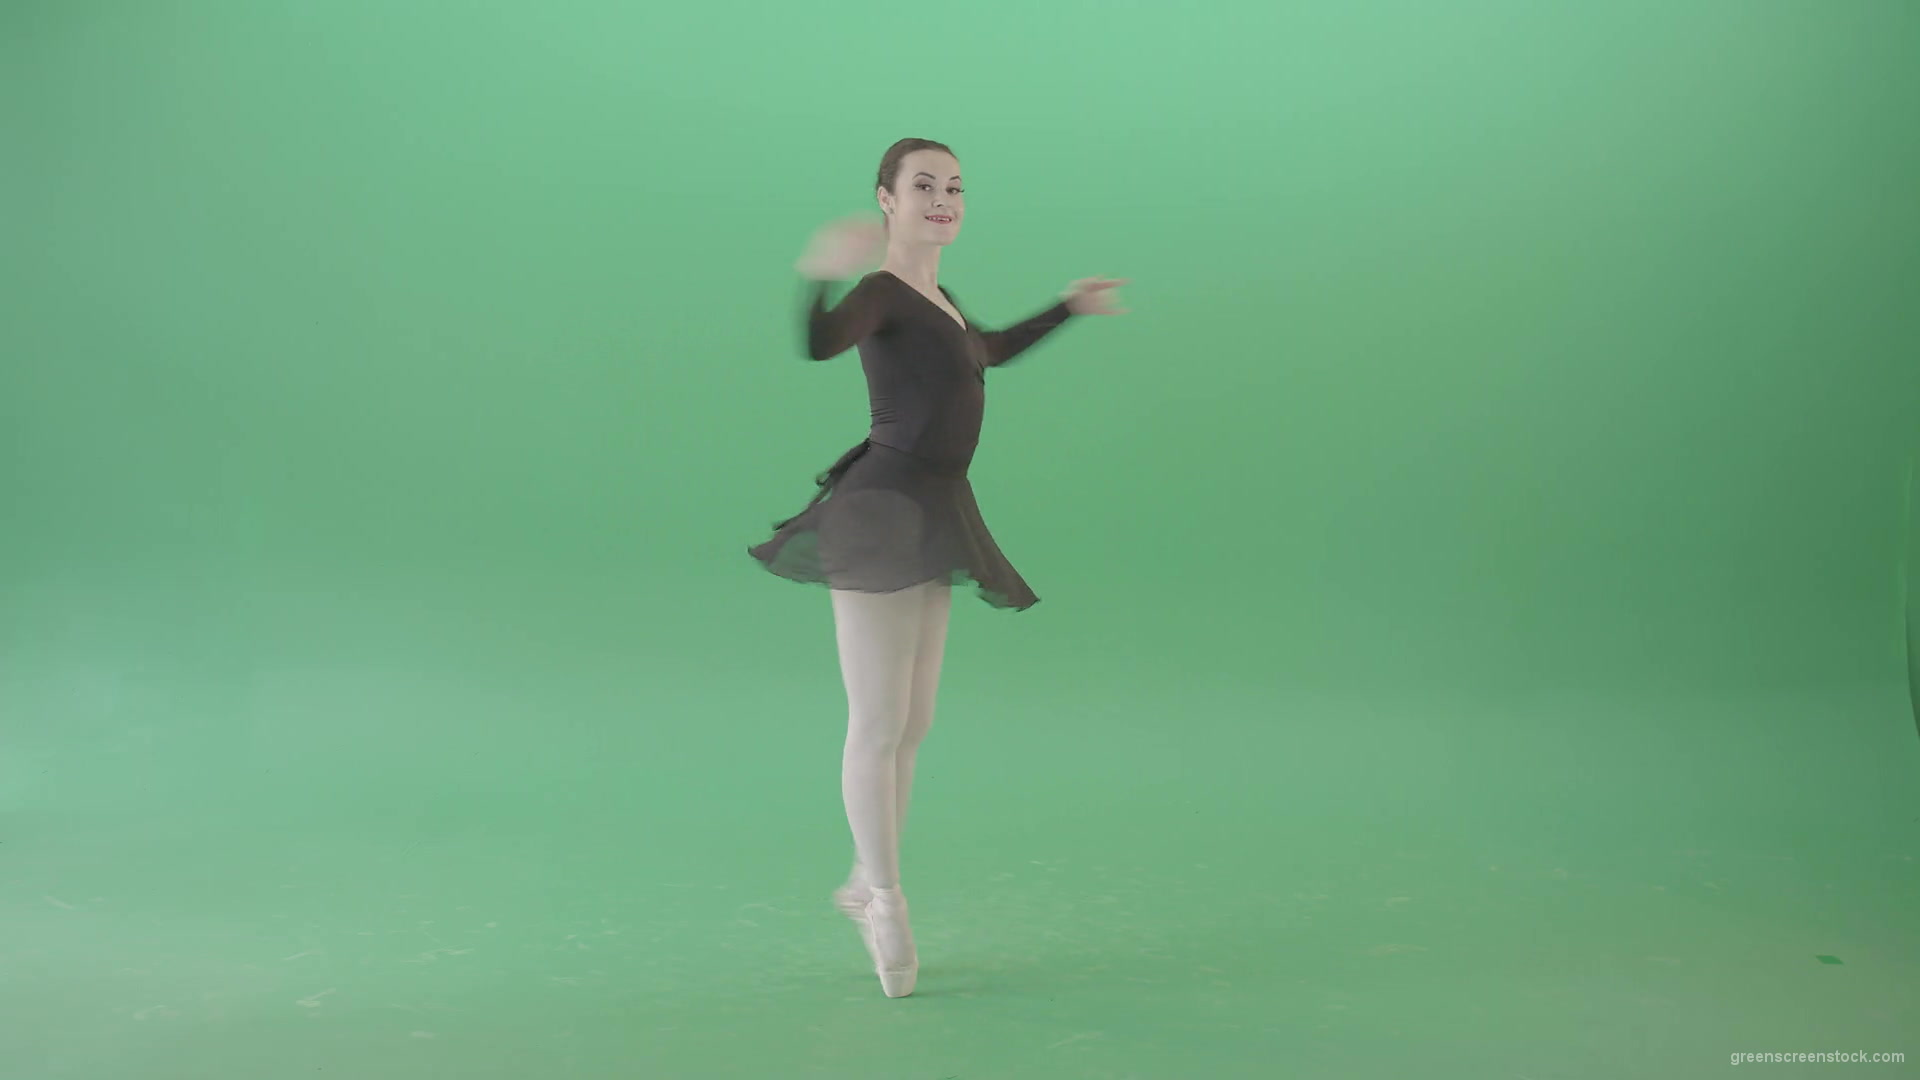 Ballet-Art-Ballerina-girl-spinning-in-dance-on-green-screen-4K-Video-Footage-1920_006 Green Screen Stock